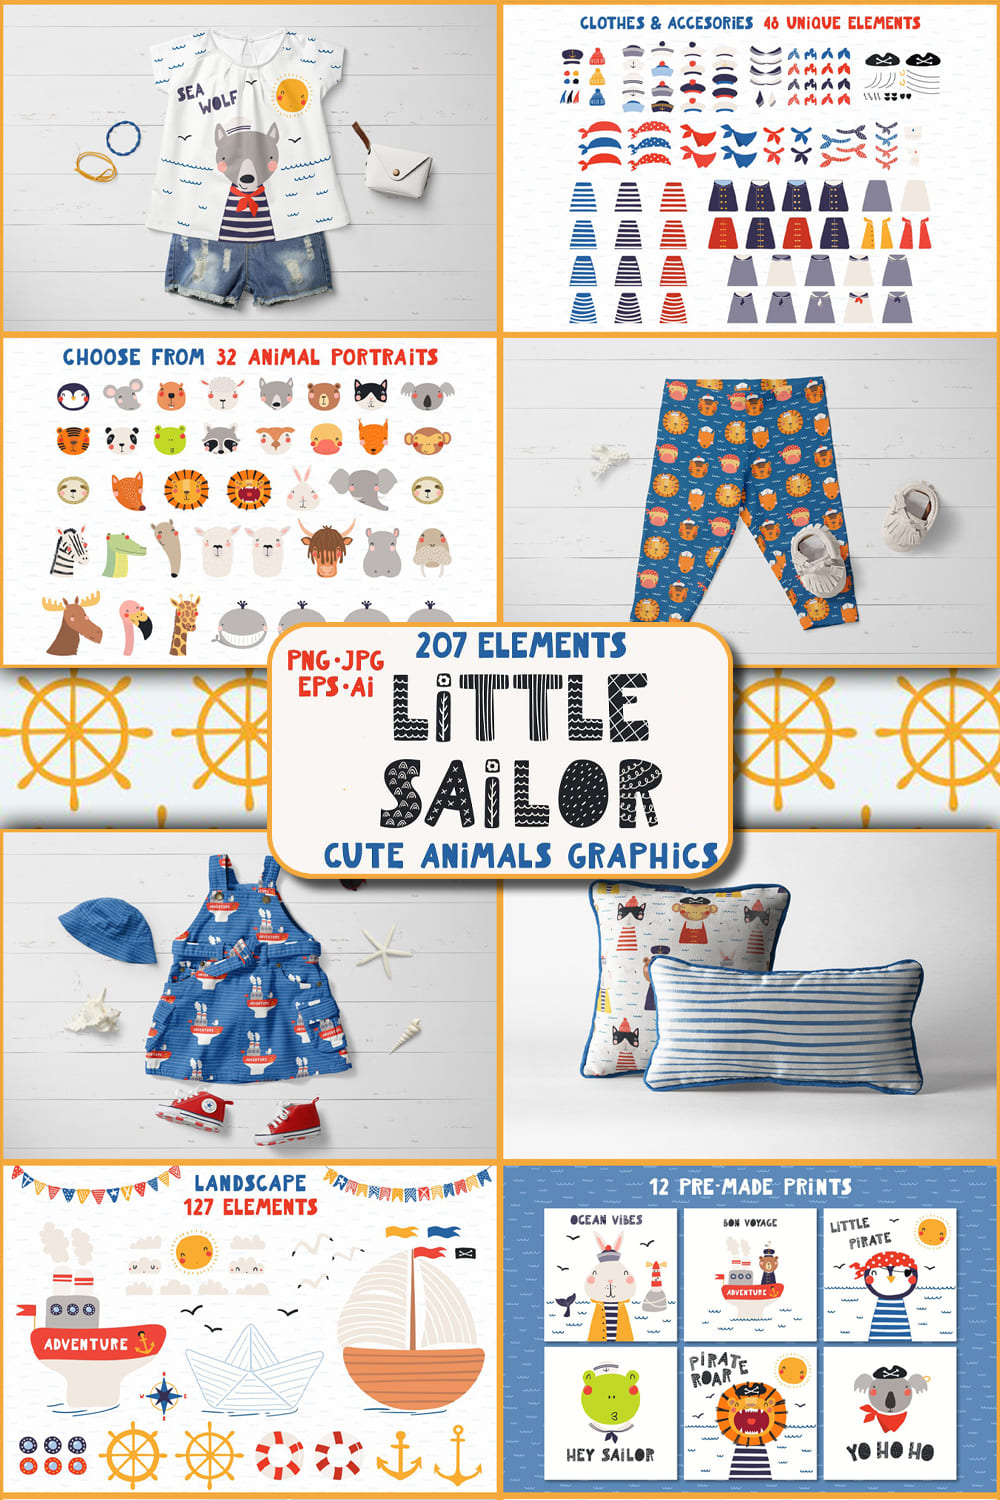 5956758 little sailor cute animals graphics pinterest 1000 1500